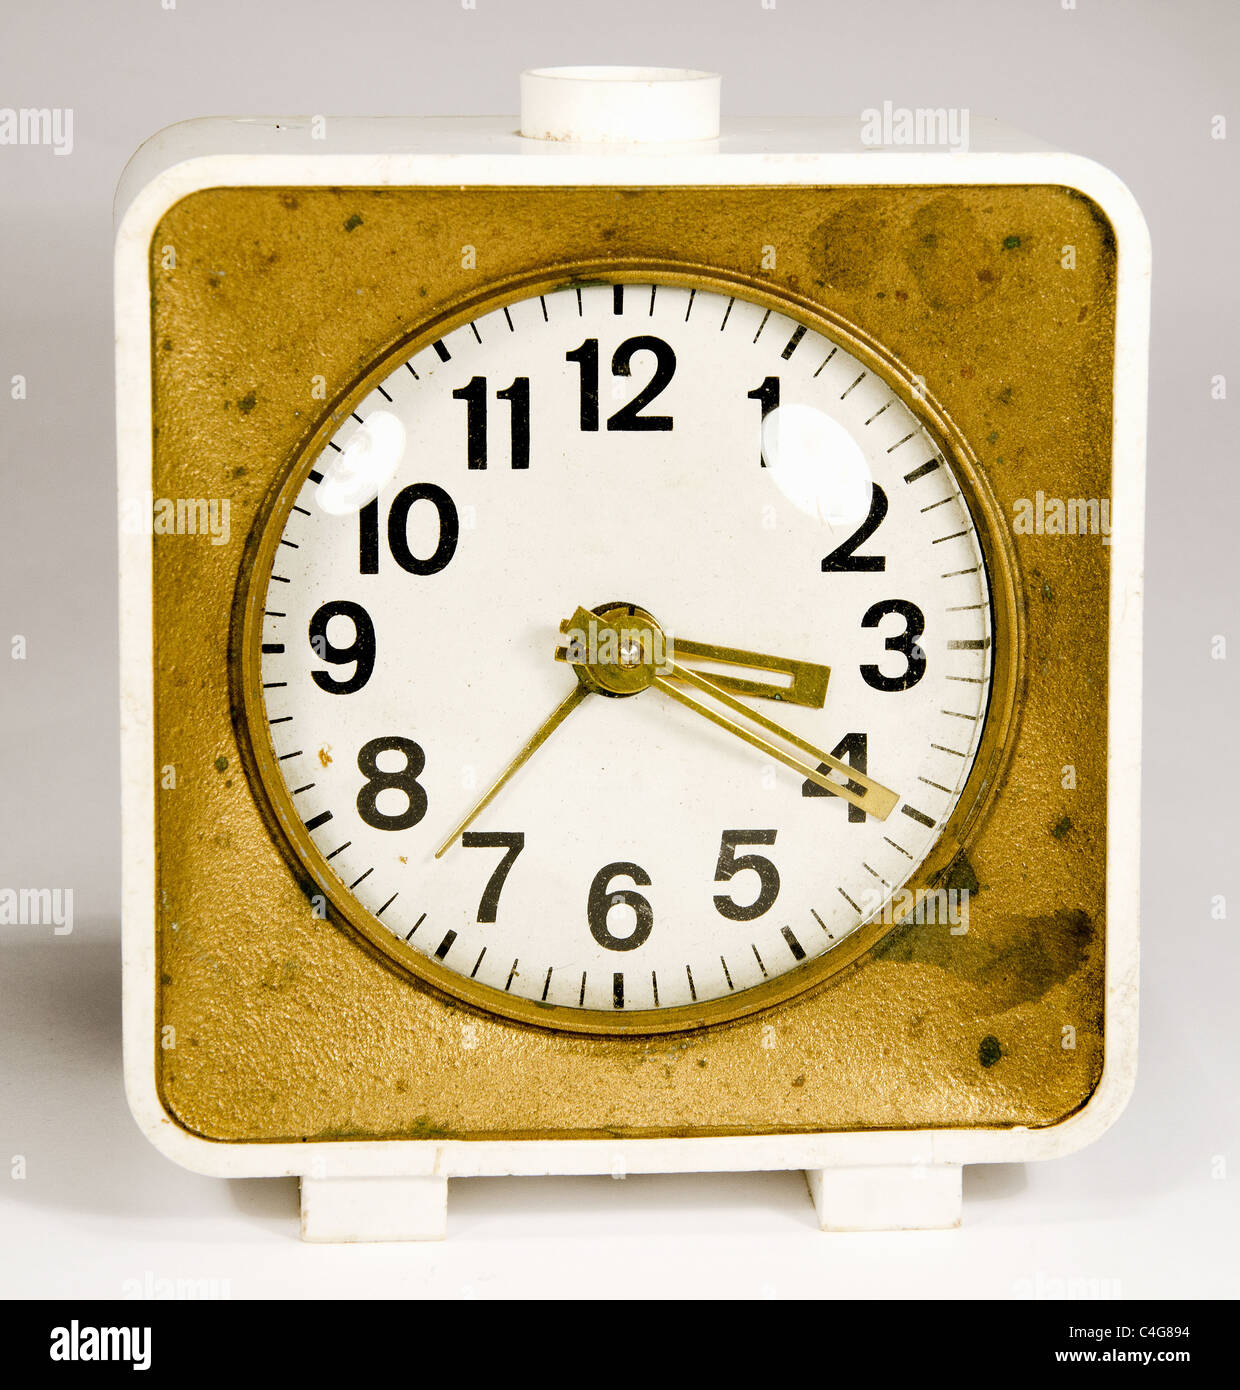 Antiguo reloj con tres flechas que muestran 3:20. Oro blanco antiguo reloj alarma. Foto de stock